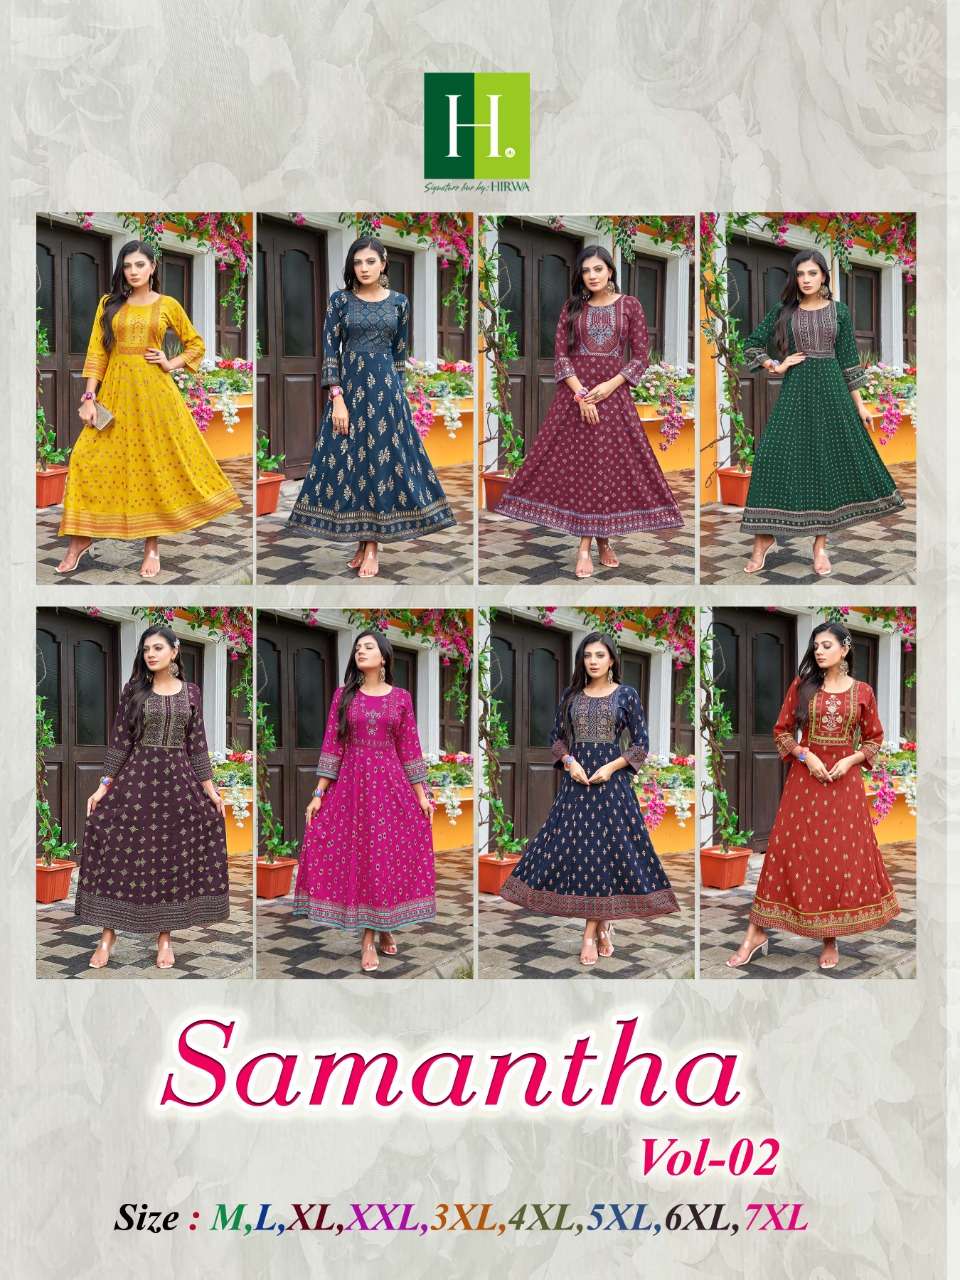 hirwa samantha vol 2 heavy rayon designer kurtis wholesale price supplier surat